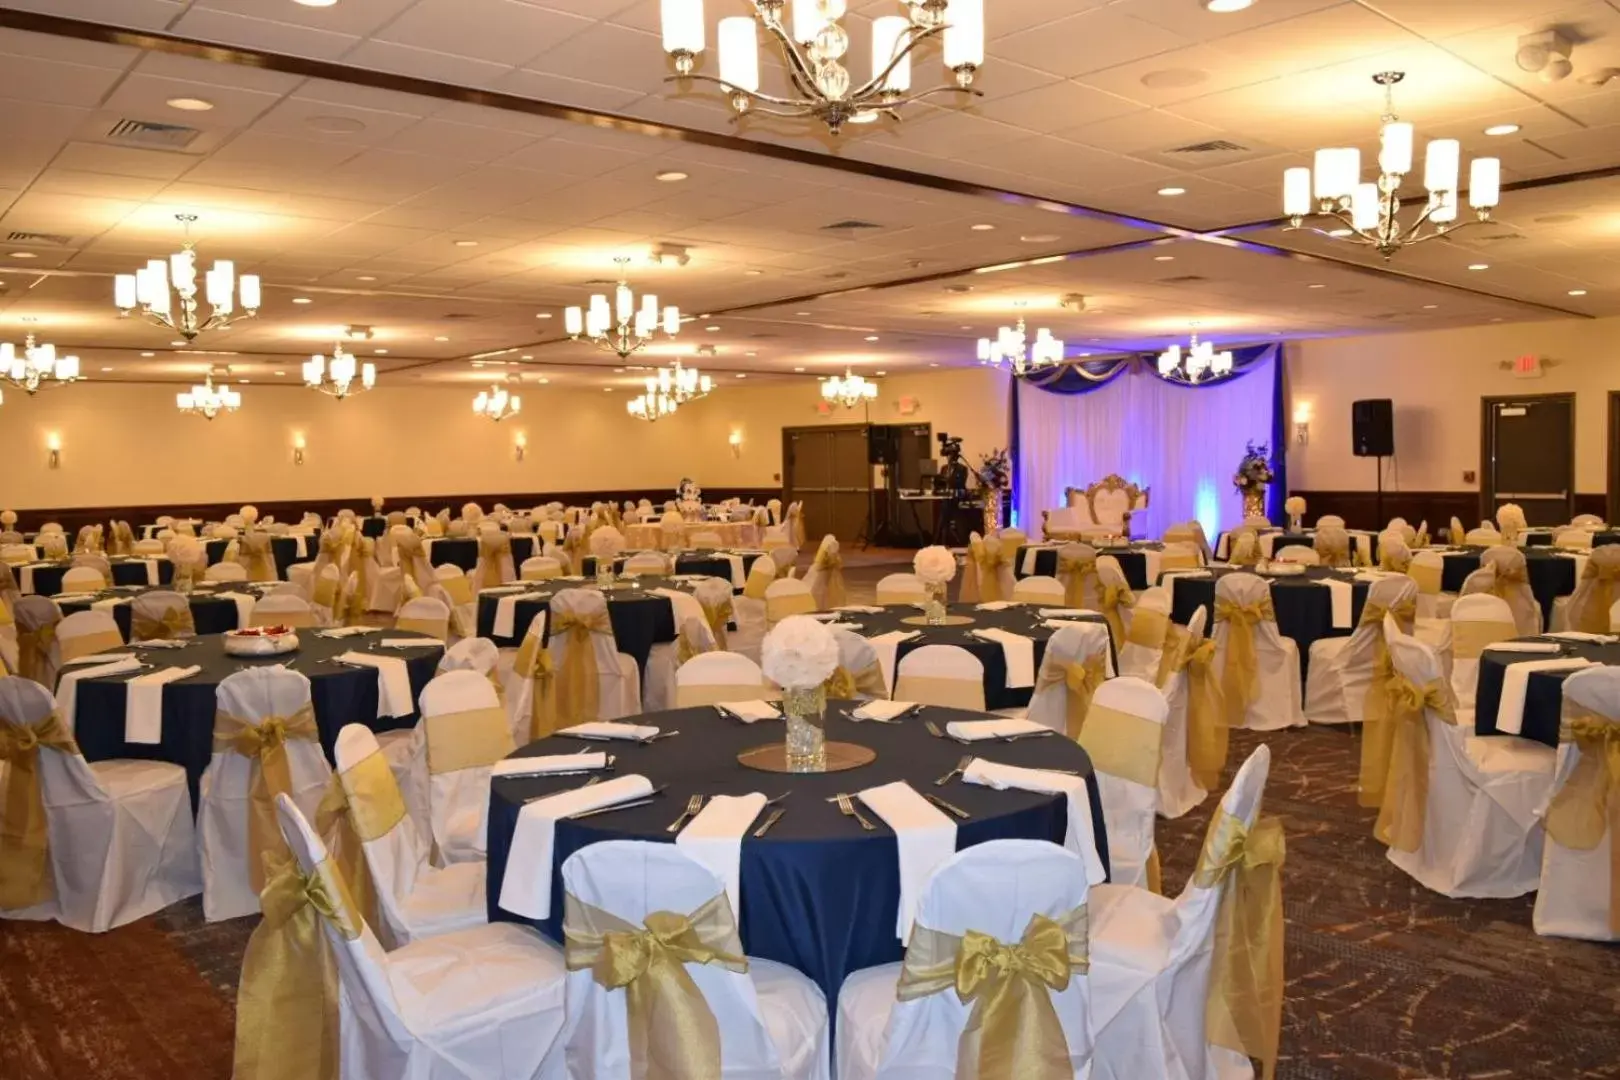 Banquet/Function facilities, Banquet Facilities in Wyndham Garden Ann Arbor